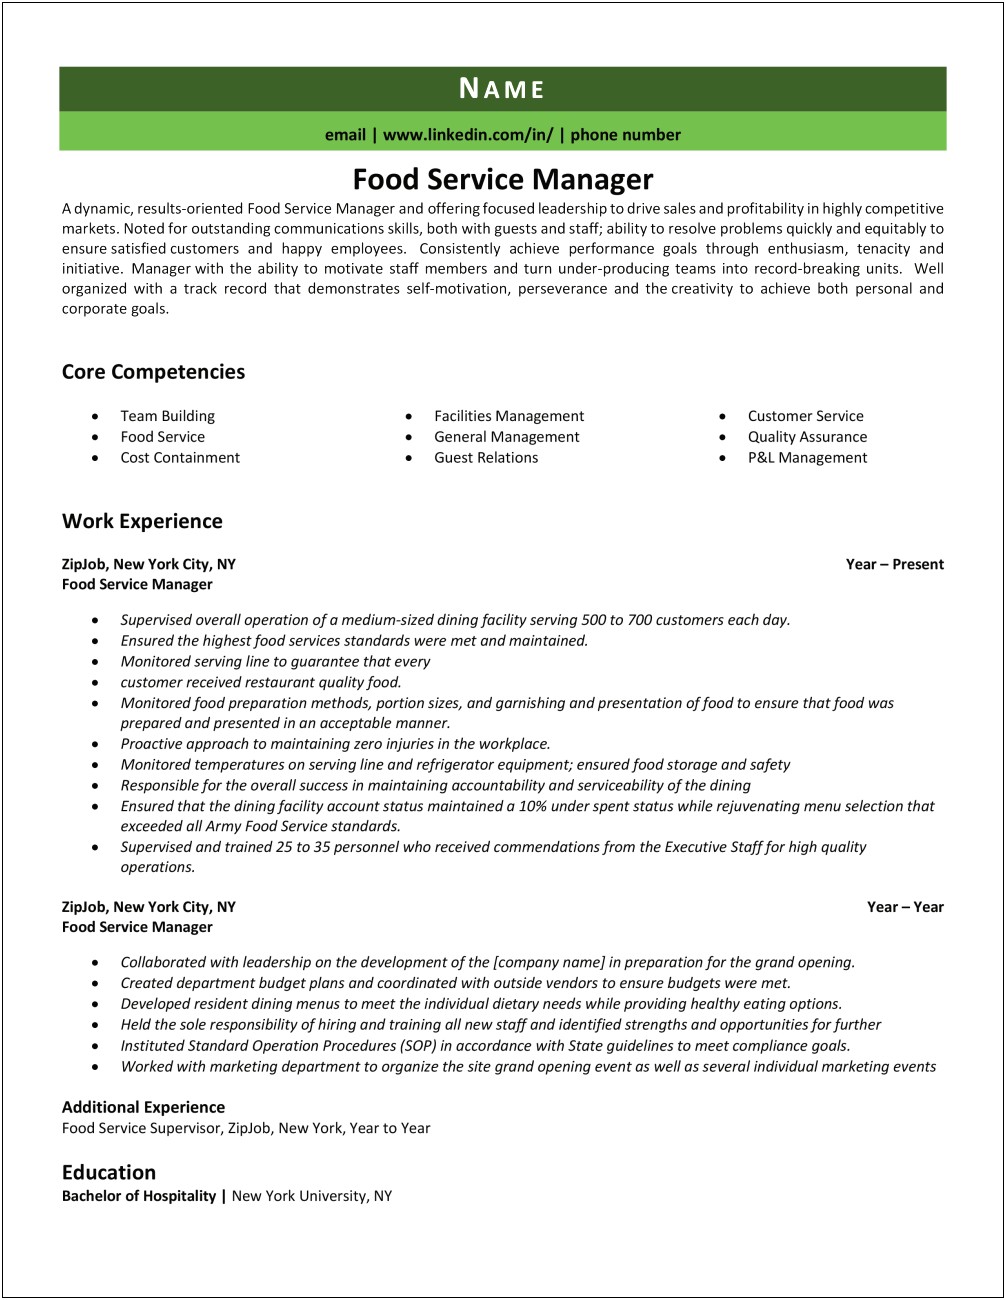 Food Service Supervisor Resume Objective